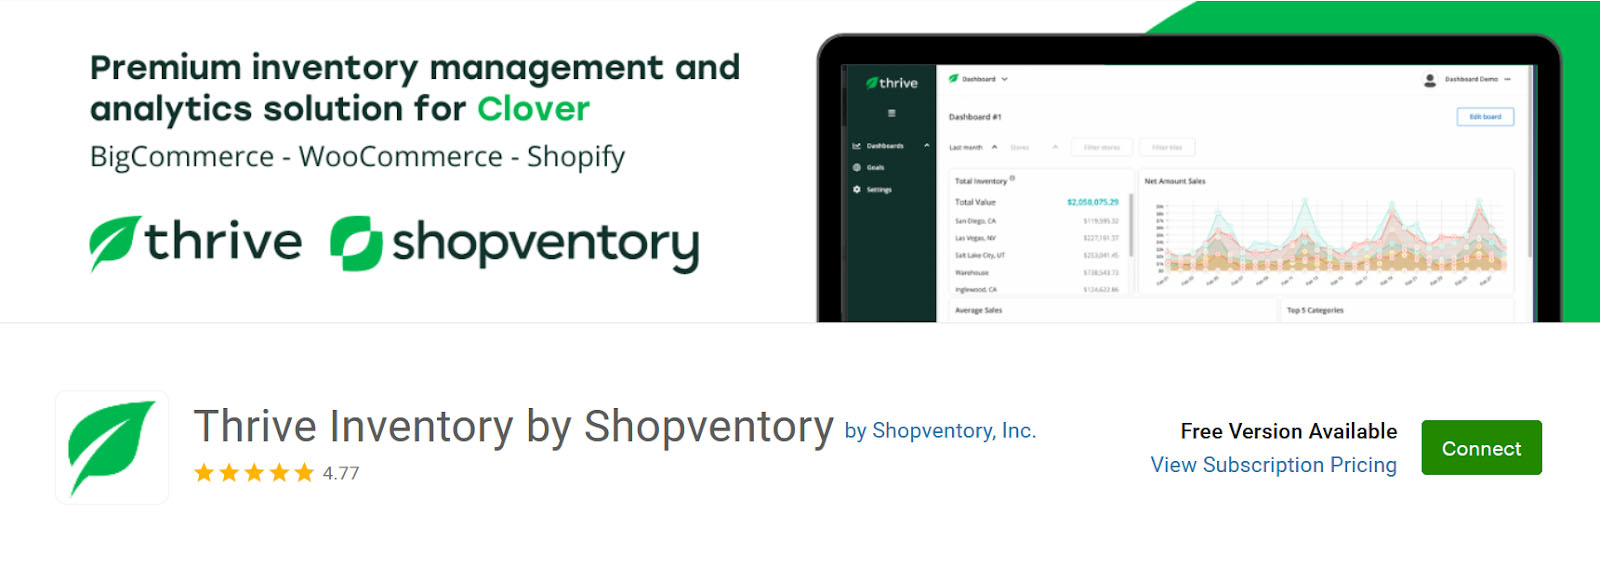 Clover Shopventory integration connect screen.